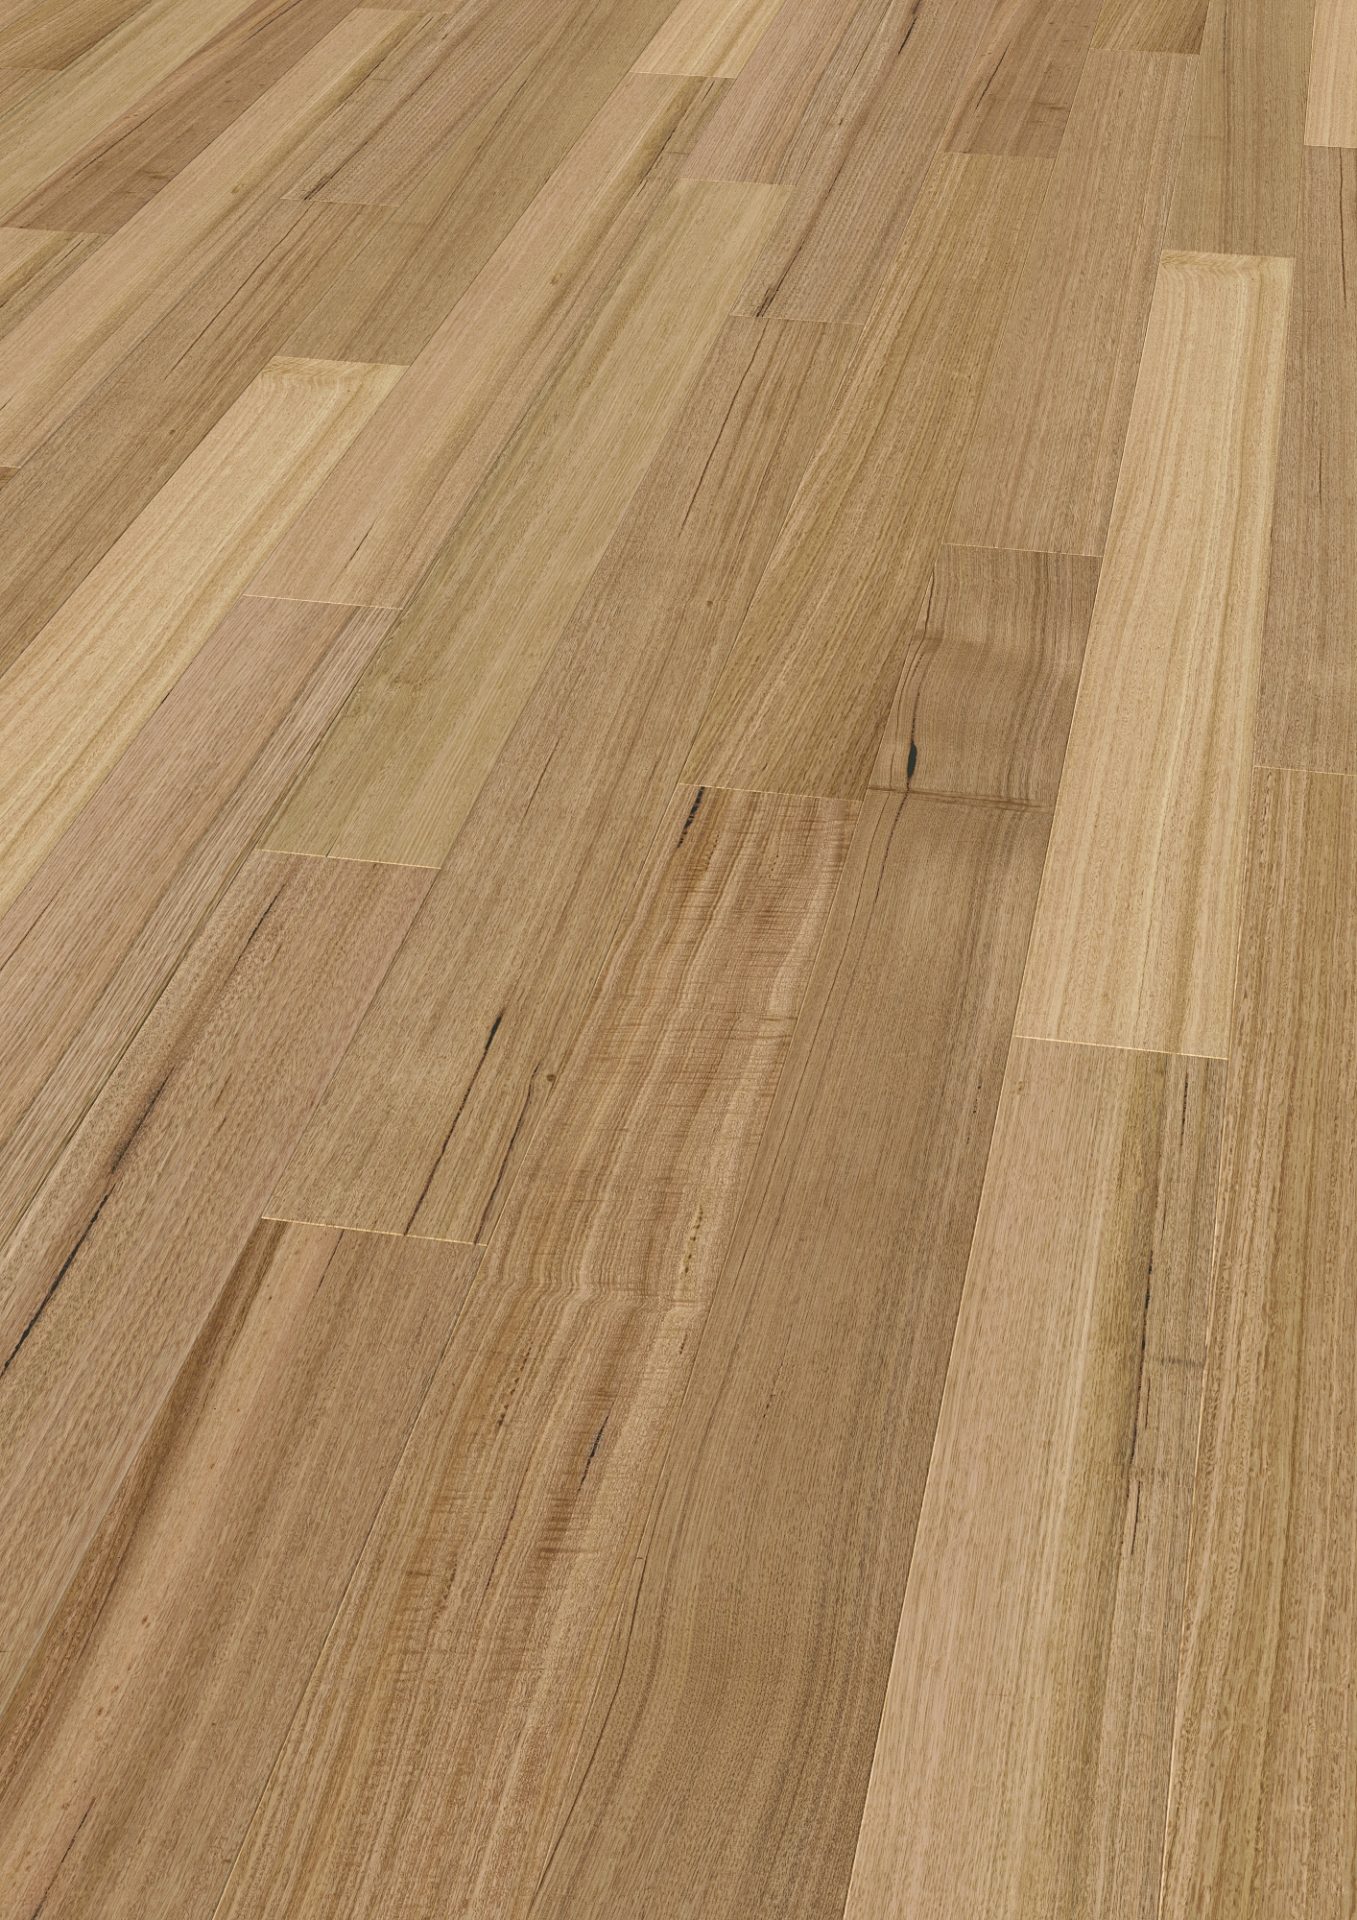 Tasmanian Oak Matte Surfaces By Hynes, Prefinished Hardwood Flooring Matte Finish